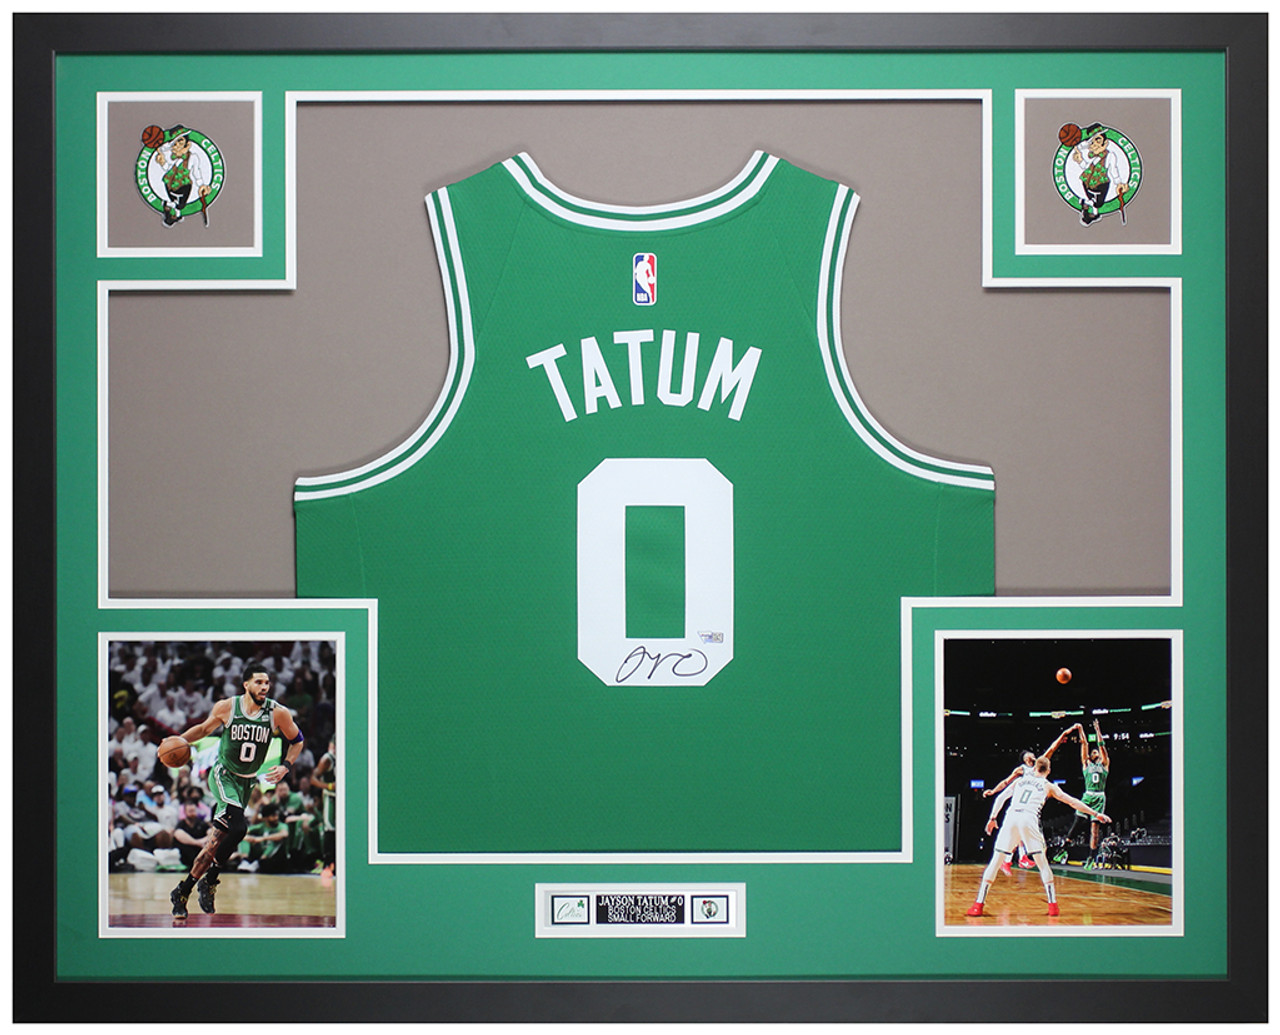 Jayson Tatum Boston Celtics Autographed Black Nike Authentic Jersey